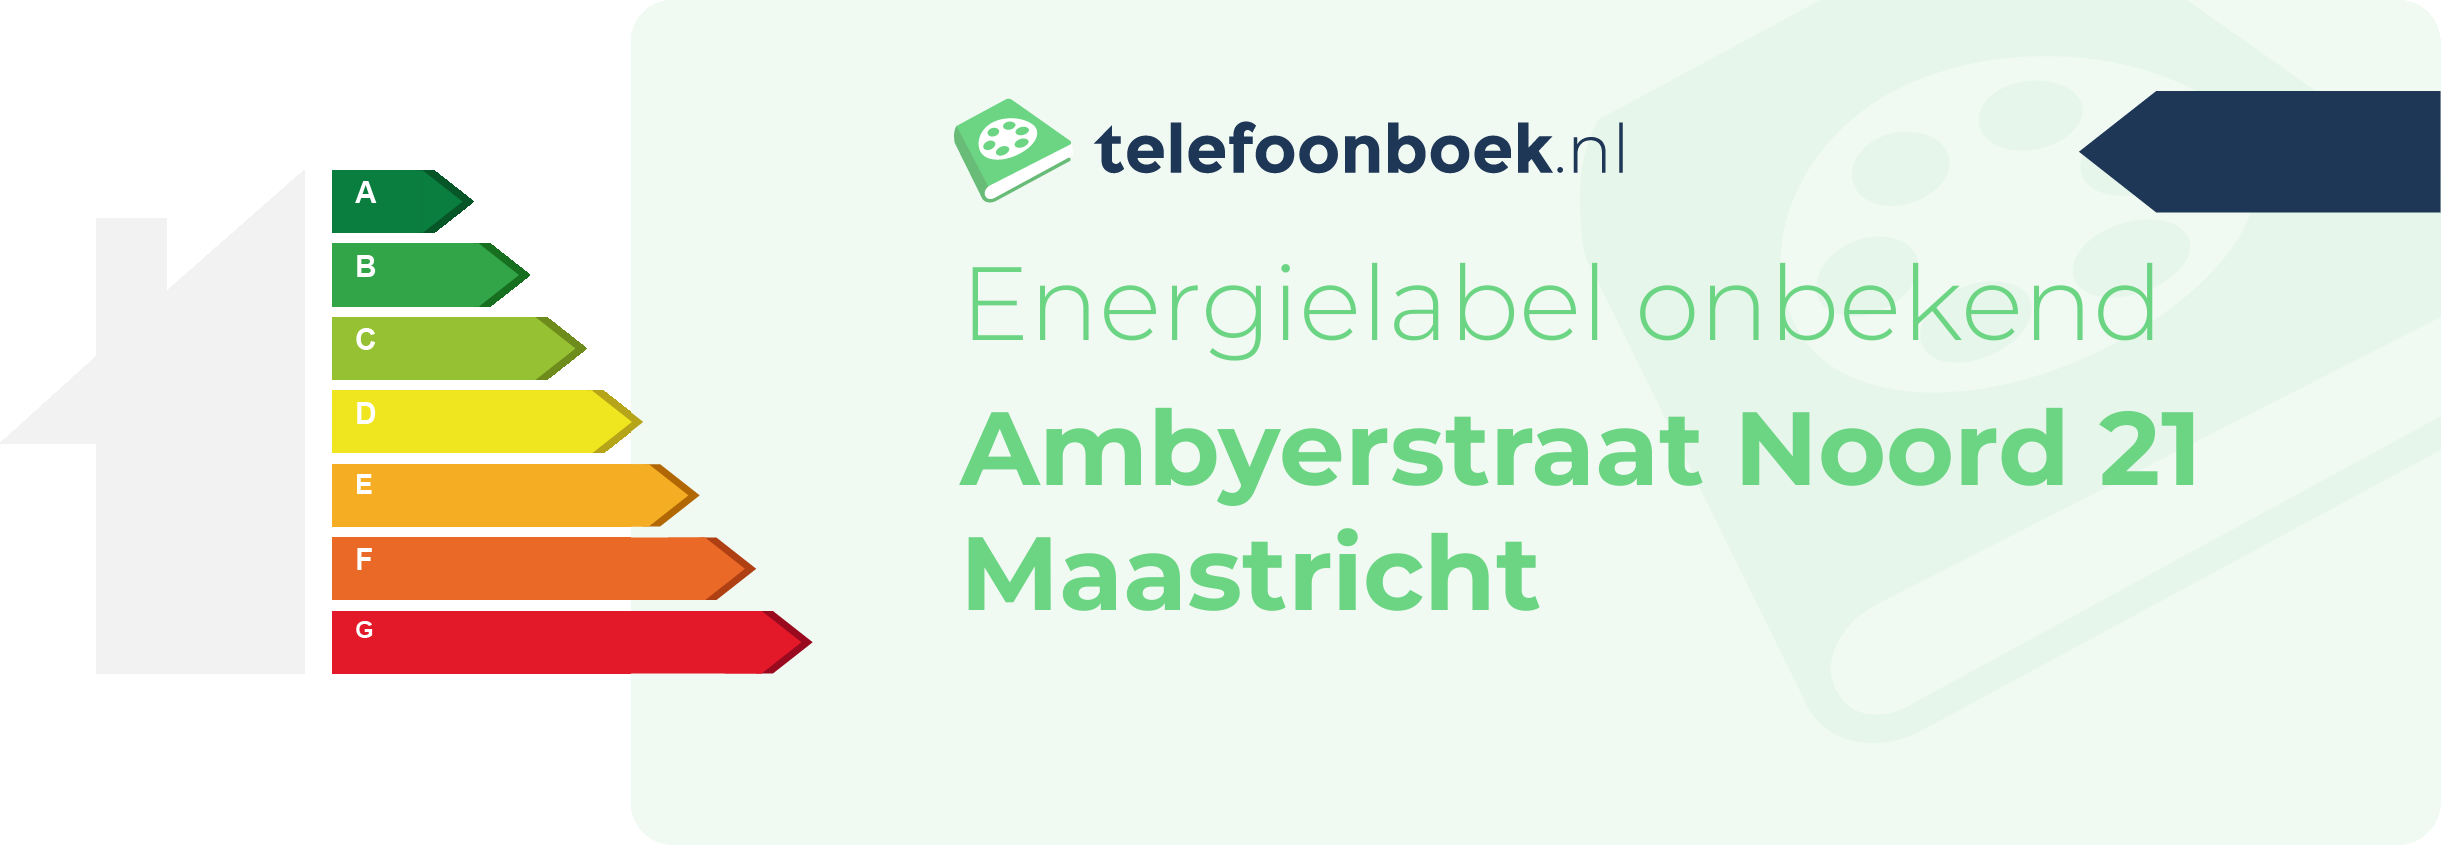 Energielabel Ambyerstraat Noord 21 Maastricht